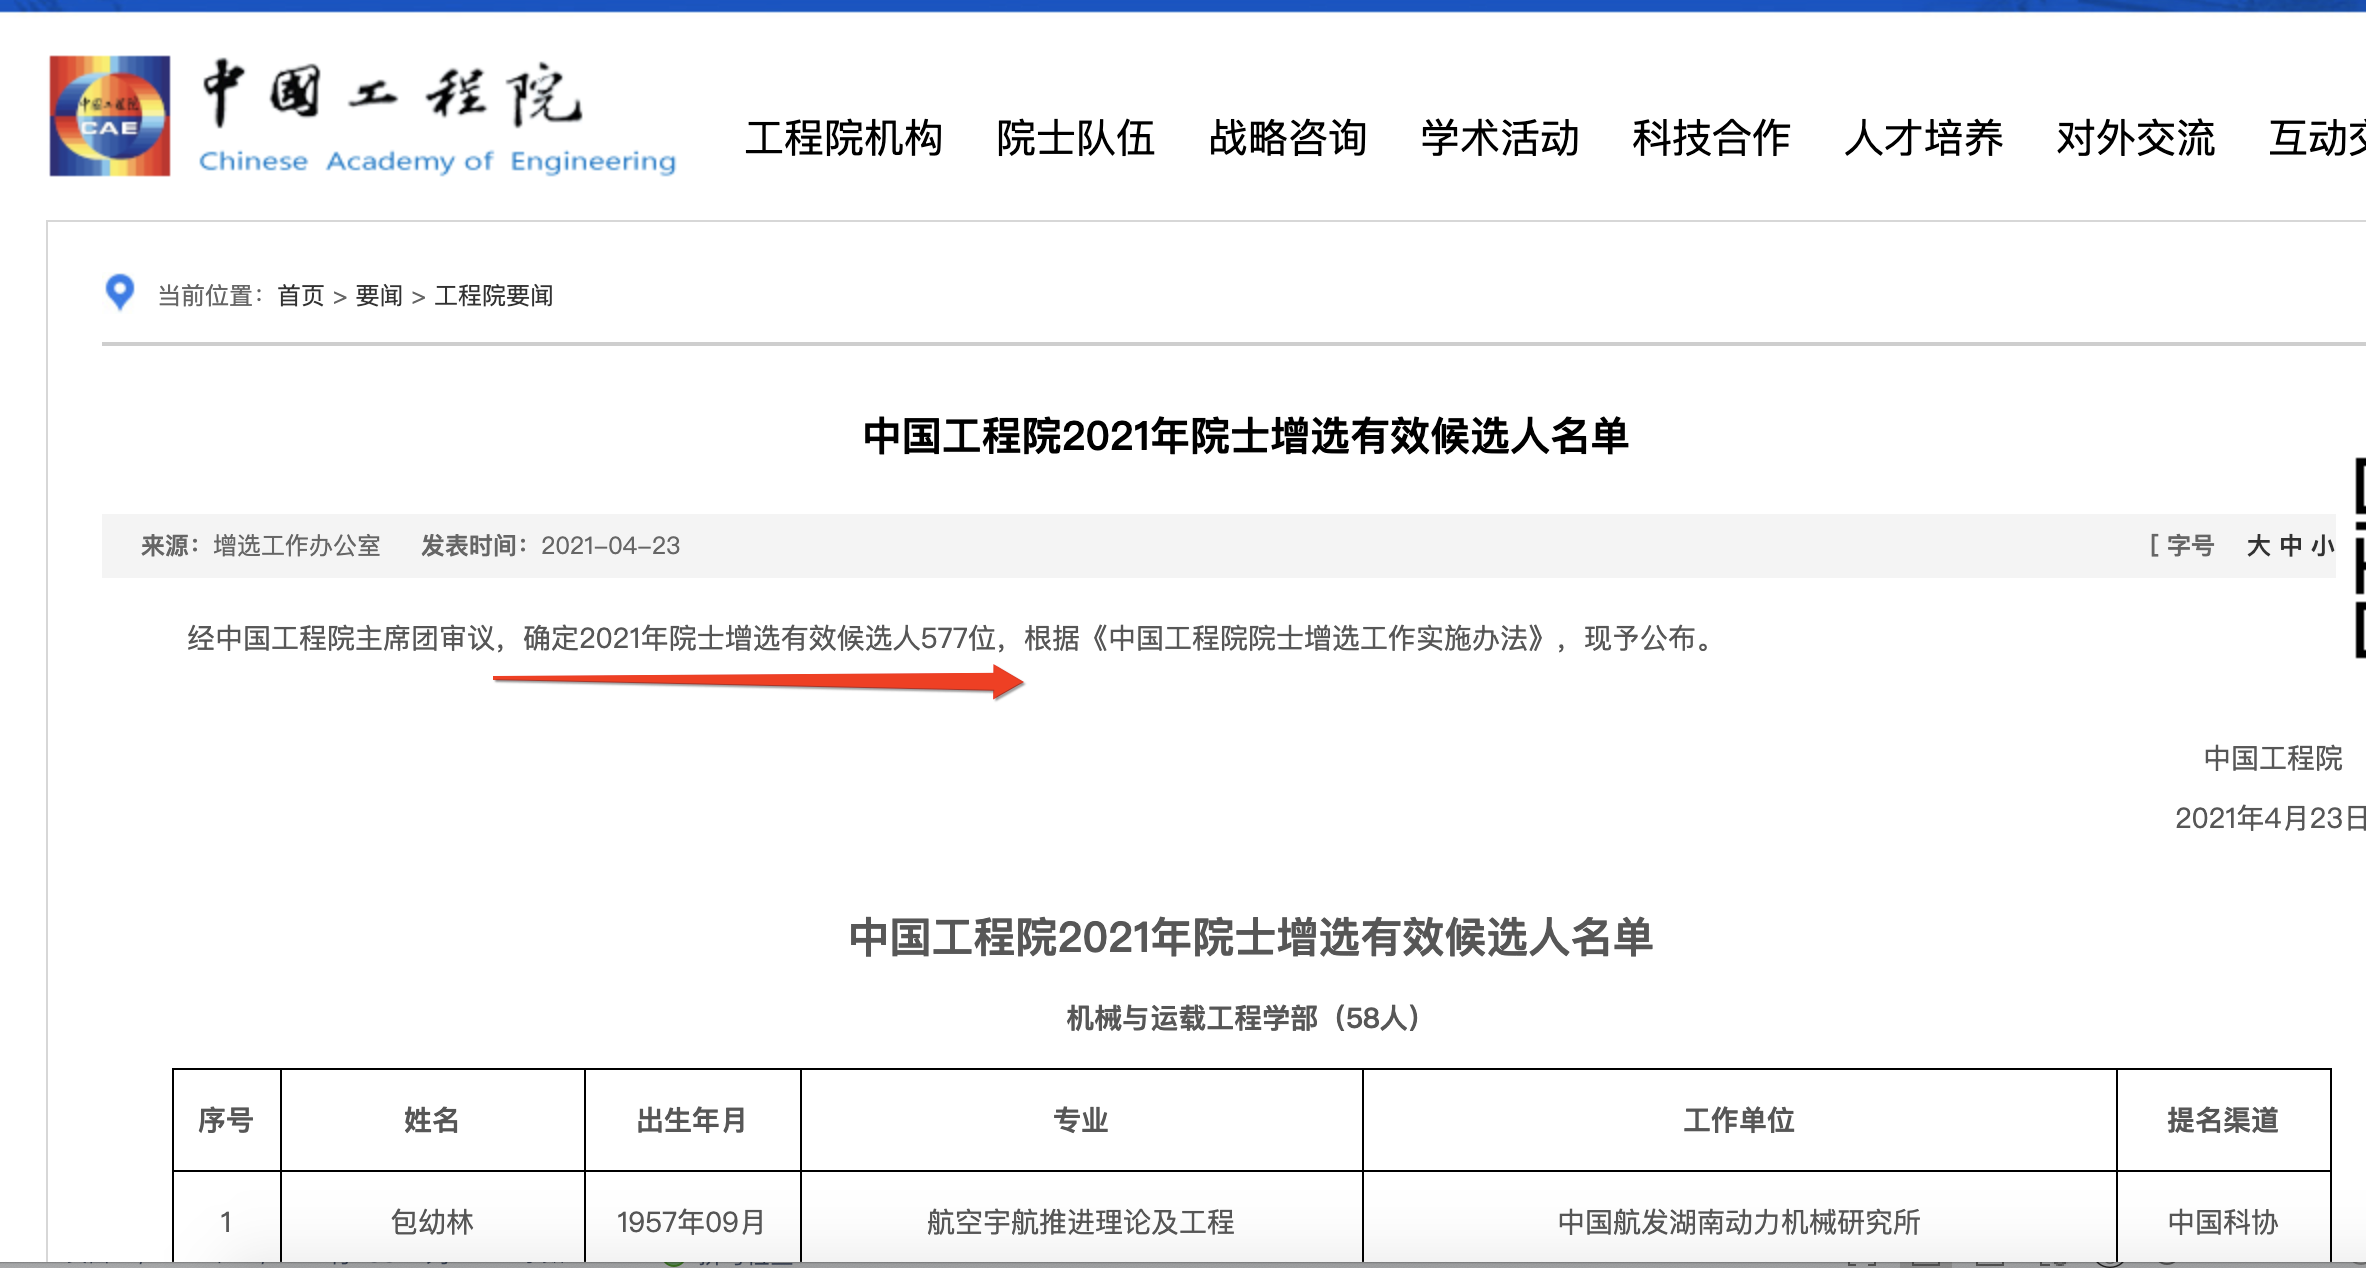 中国工程院2021年院士增选577<font color="red">位</font>有效候选人名单公布，其中医药卫生部84<font color="red">位</font>有效候选人